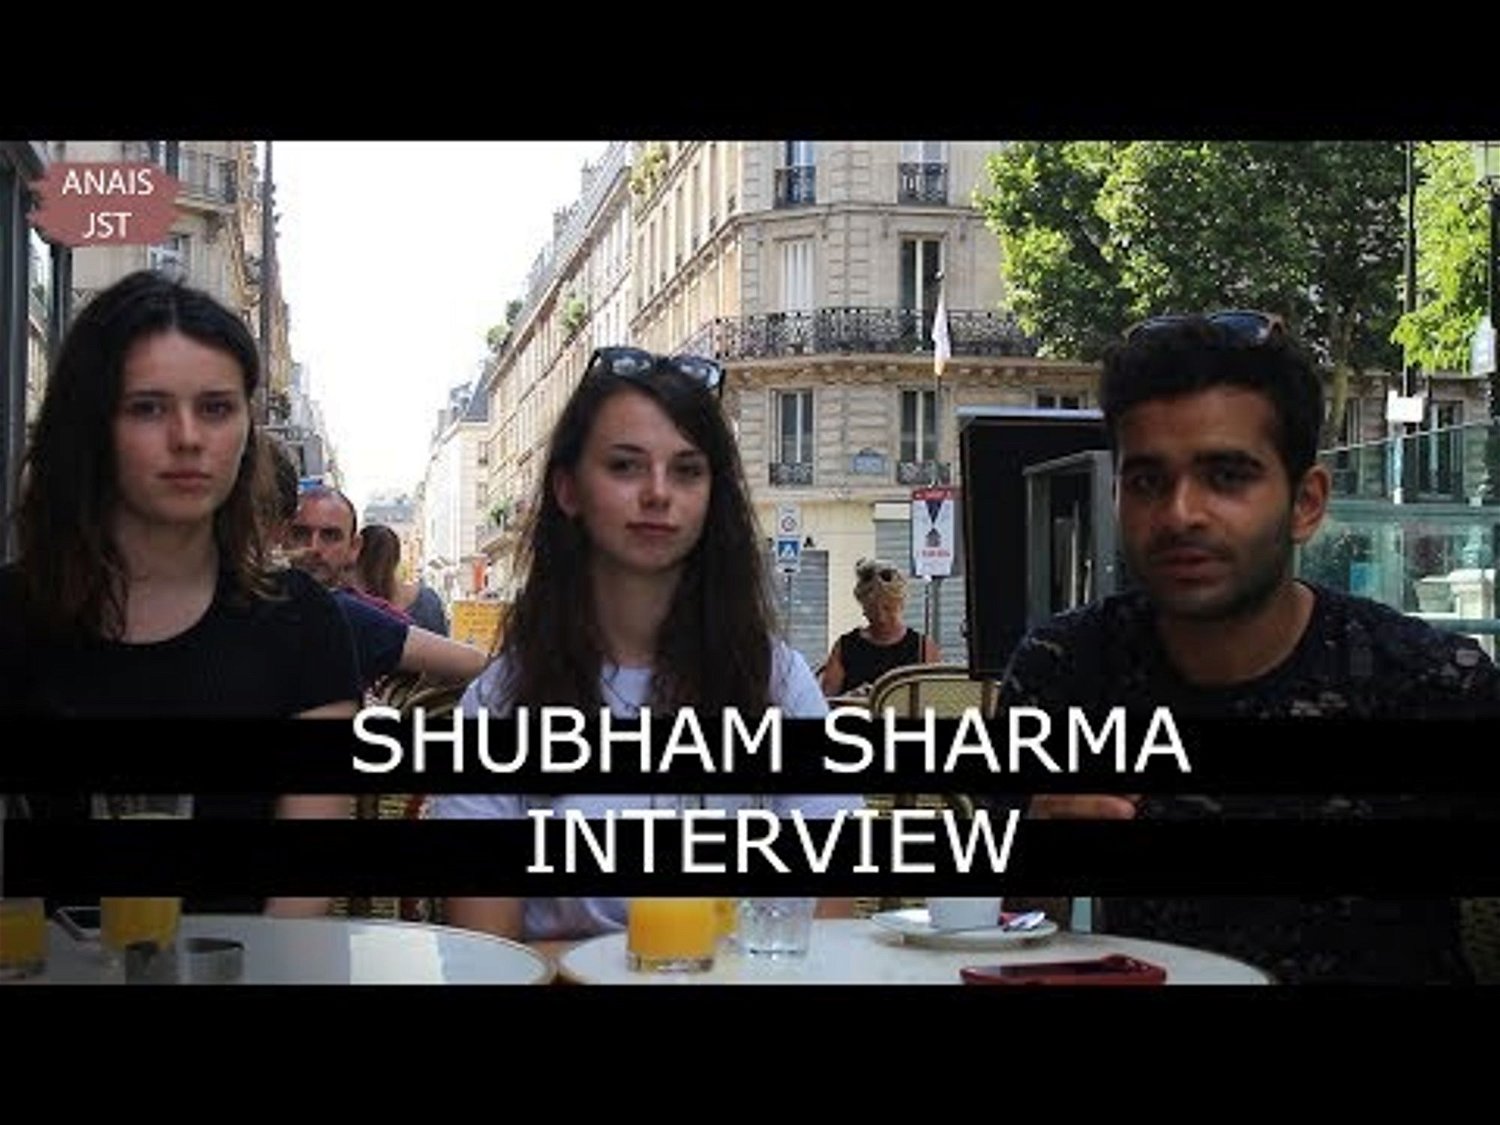 "IL Y A TROP DE GENS QUI PARLENT" SHUBHAM SHARMA